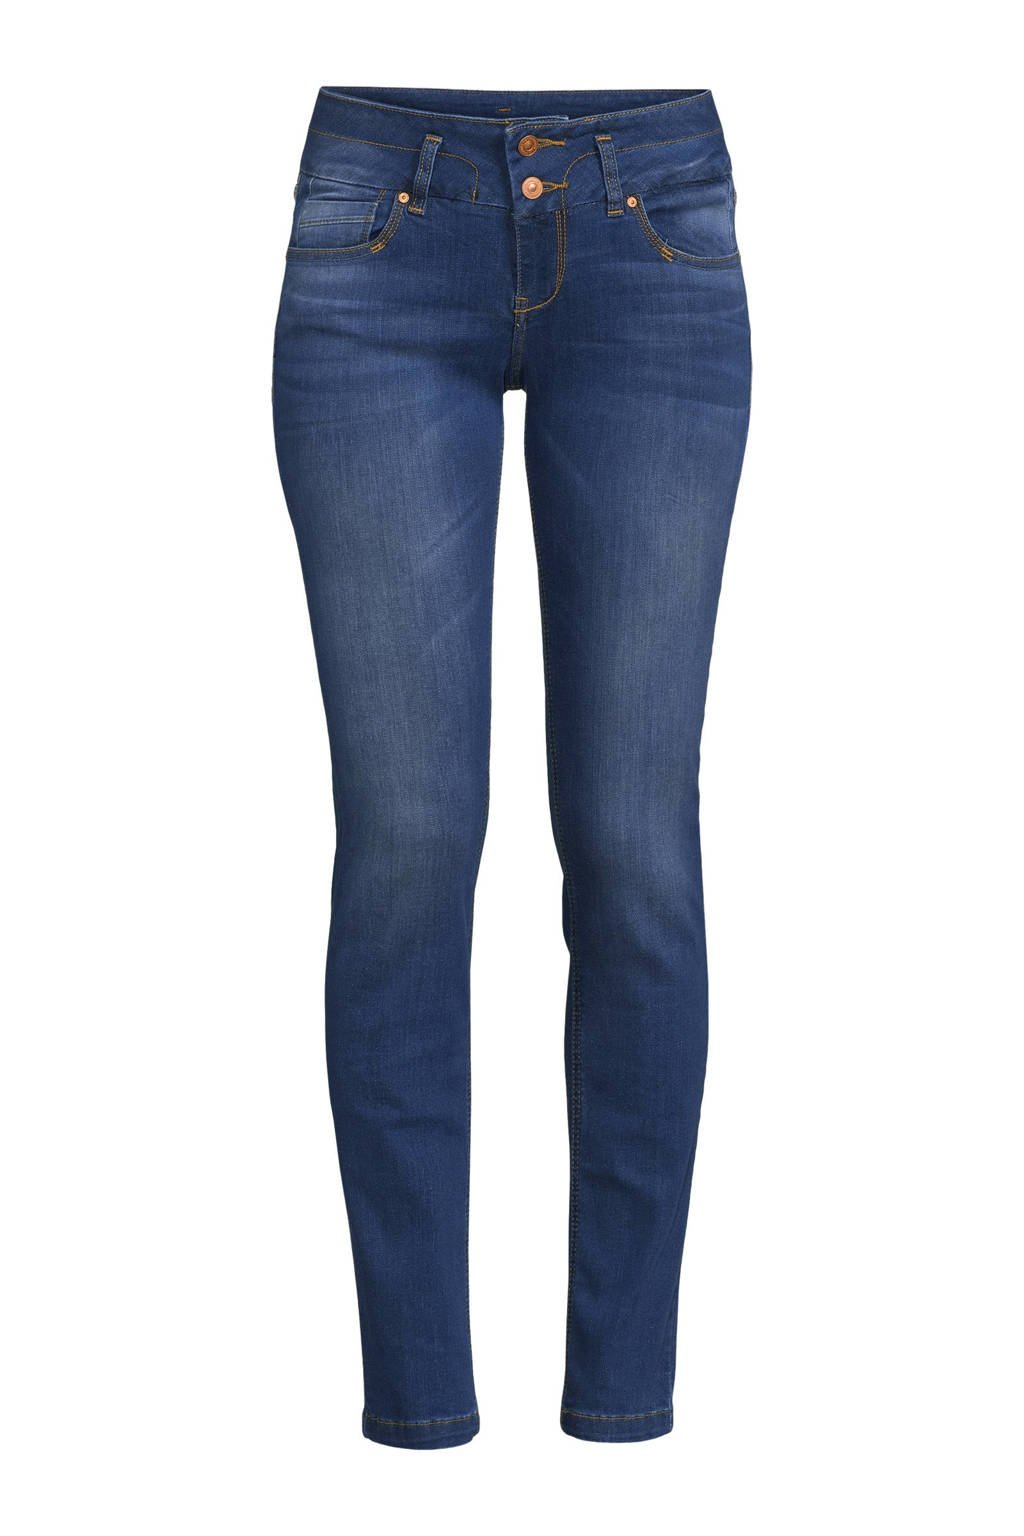 Donkerblauwe dames LTB slim fit jeans Zena van stretchdenim met regular waist